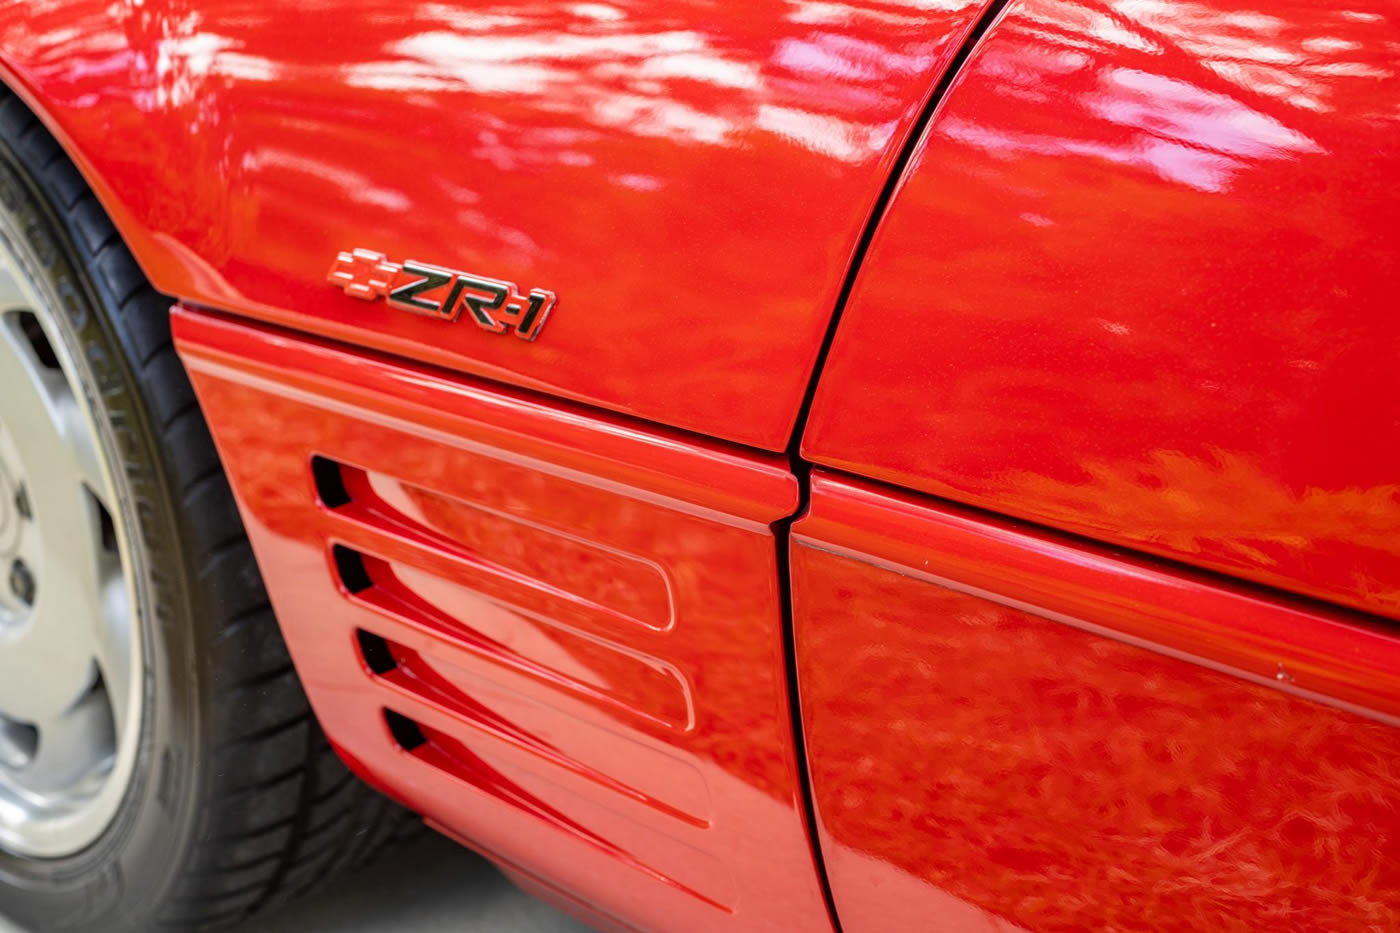 1991 Corvette ZR-1 in Bright Red Over Gray Leather